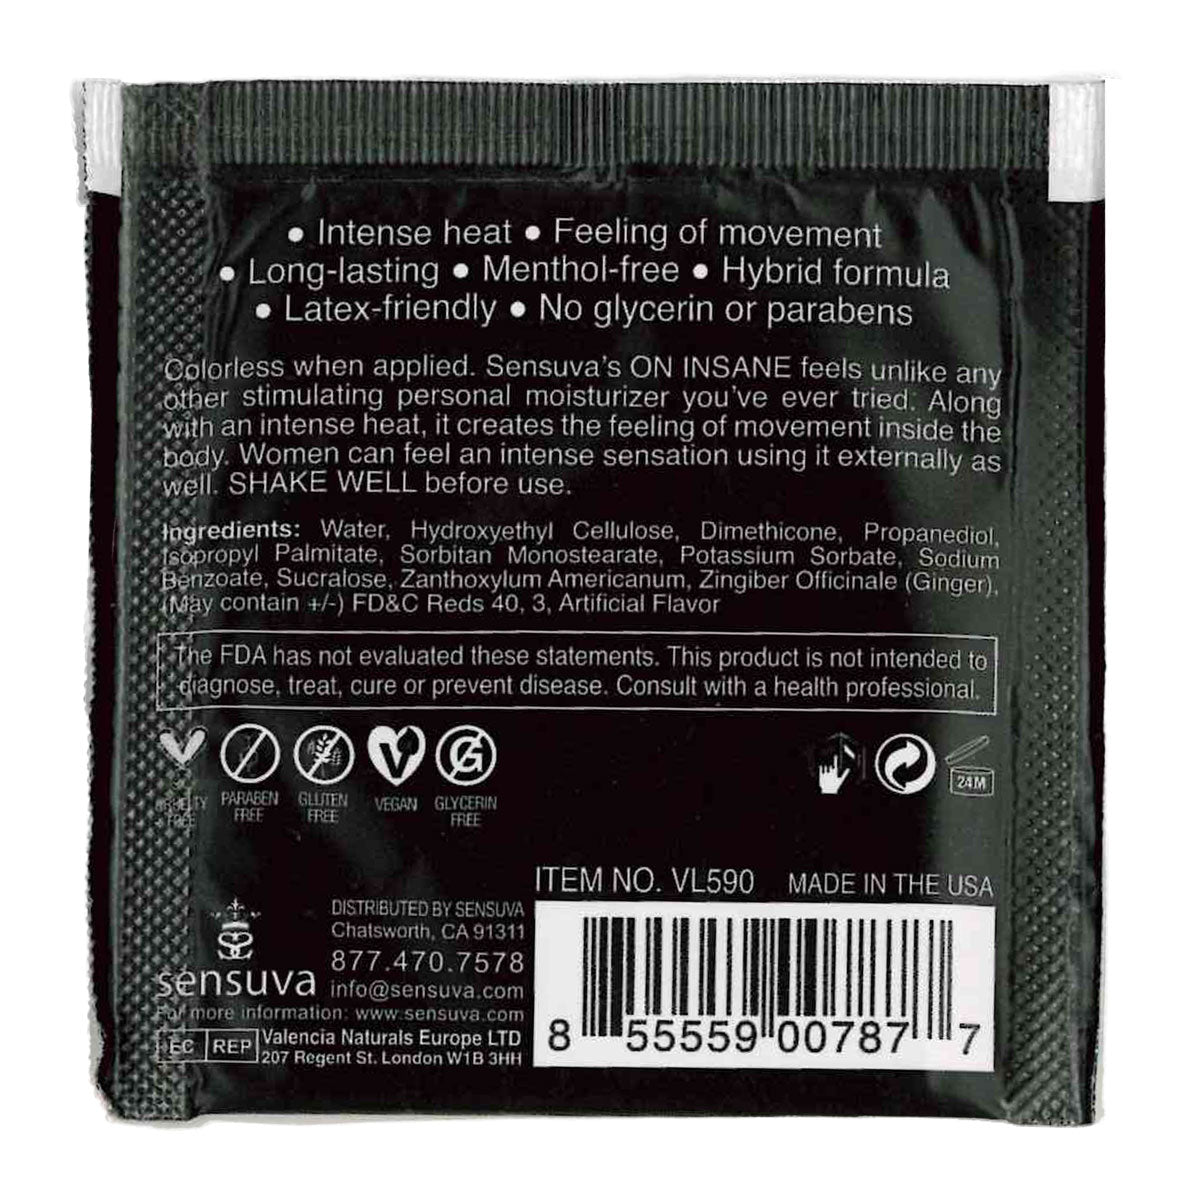 Sensuva – Ultra-Stimulating ON INSANE - Cherry Pop - Foil 6ml/0.20 fl oz.